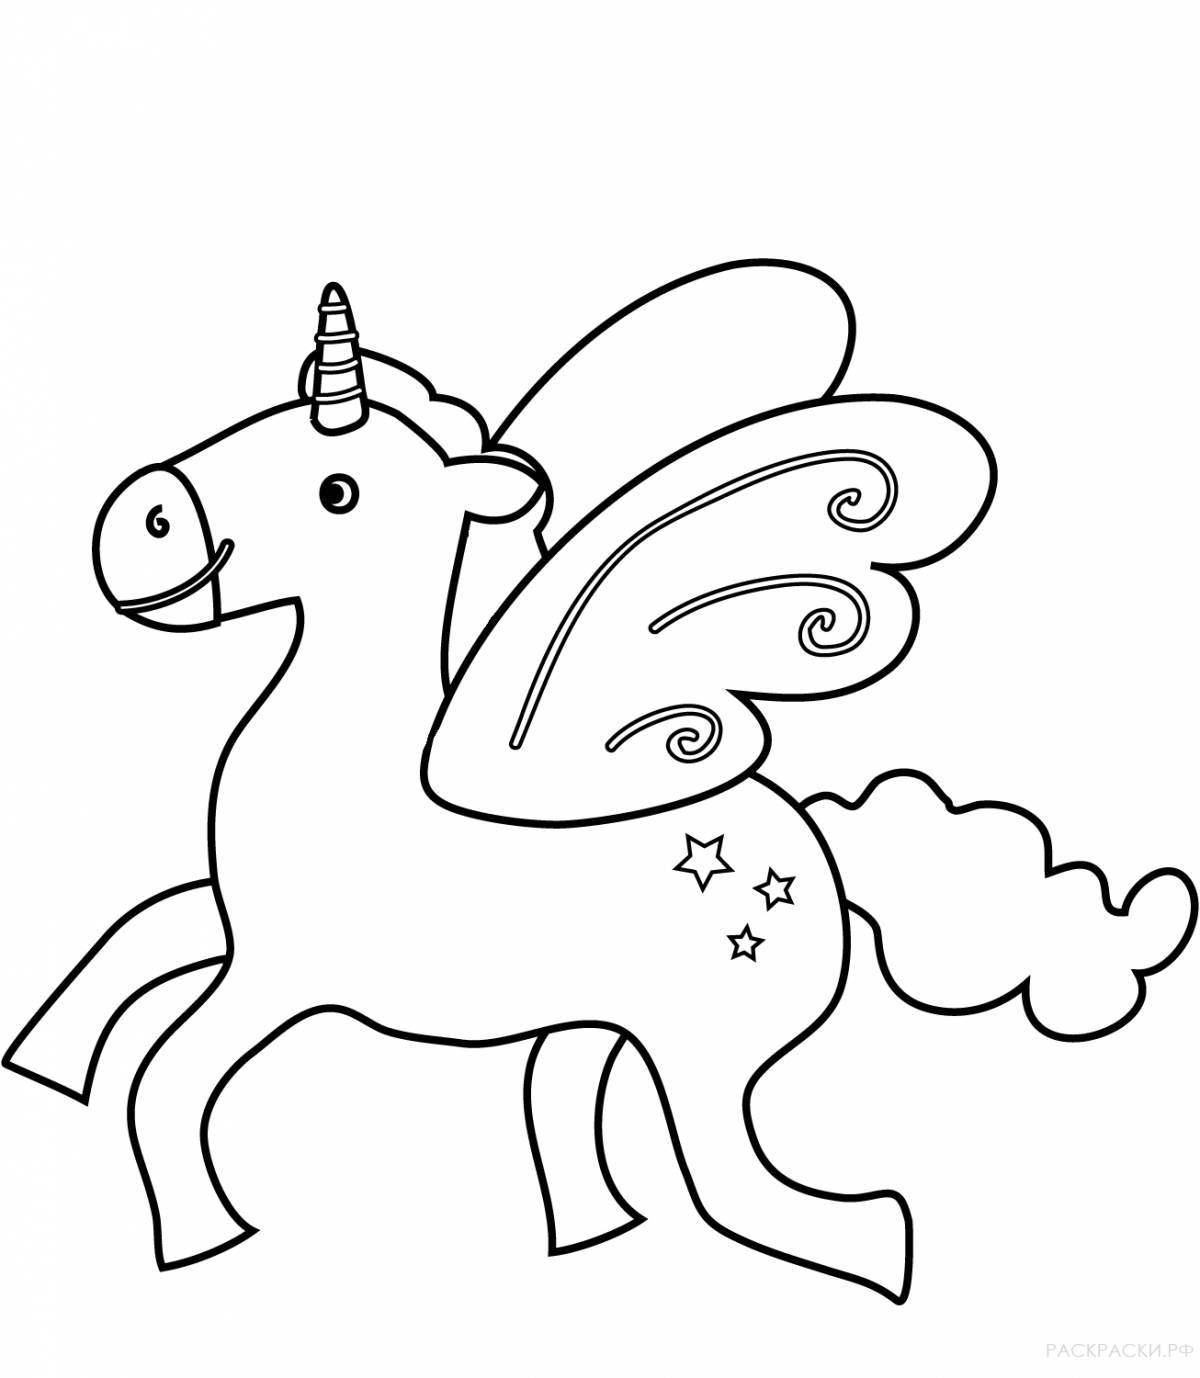 Joyful unicorn coloring book for kids 5-6 years old